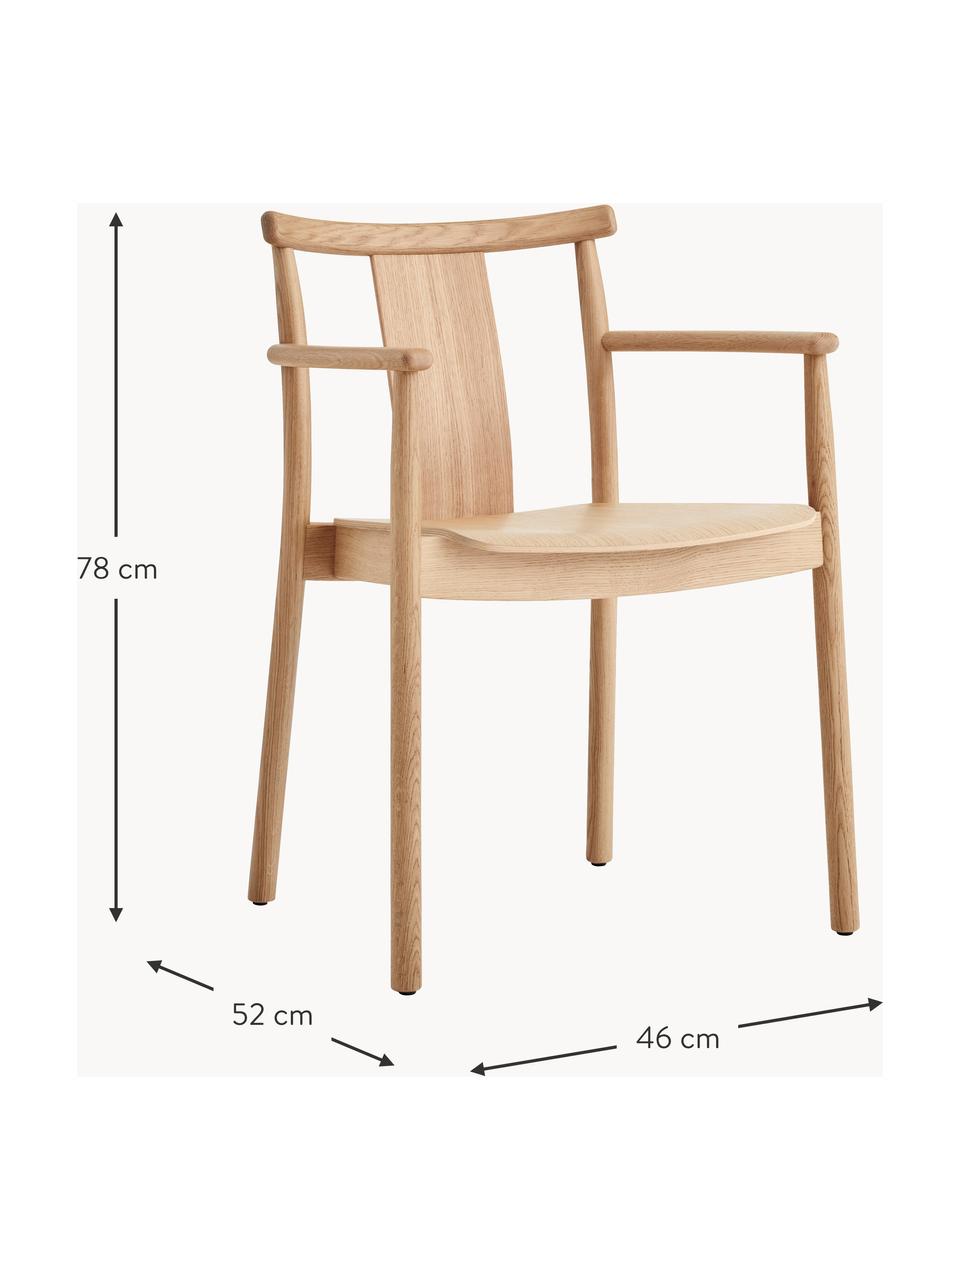 Židle s područkami z dubového dřeva Merkur, Dubové dřevo, překližka, Dubové dřevo, Š 46 cm, H 52 cm